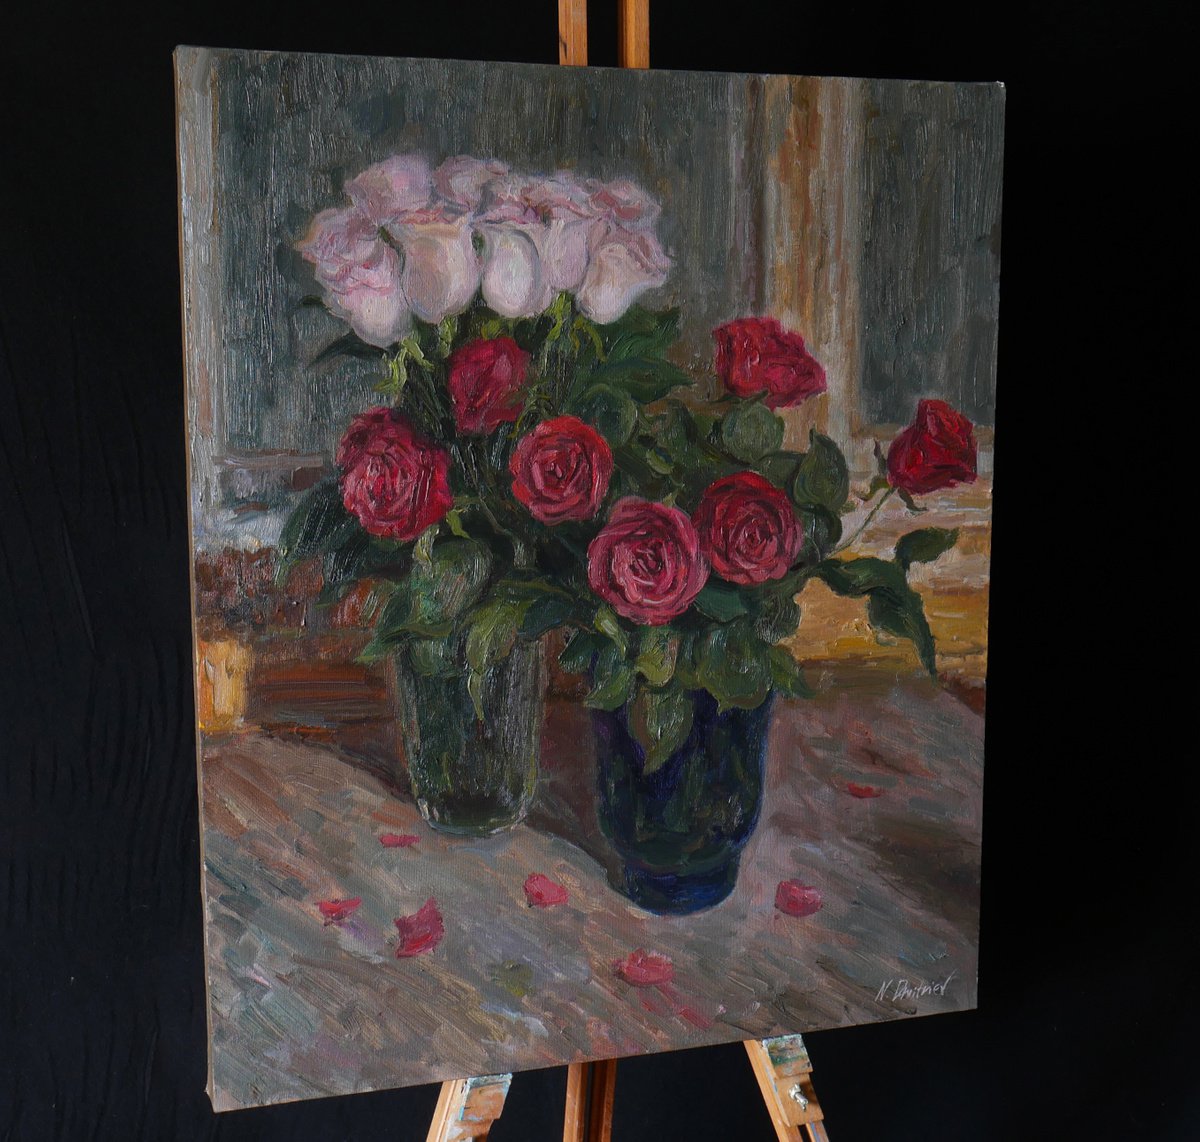 Roses - roses still life painting by Nikolay Dmitriev